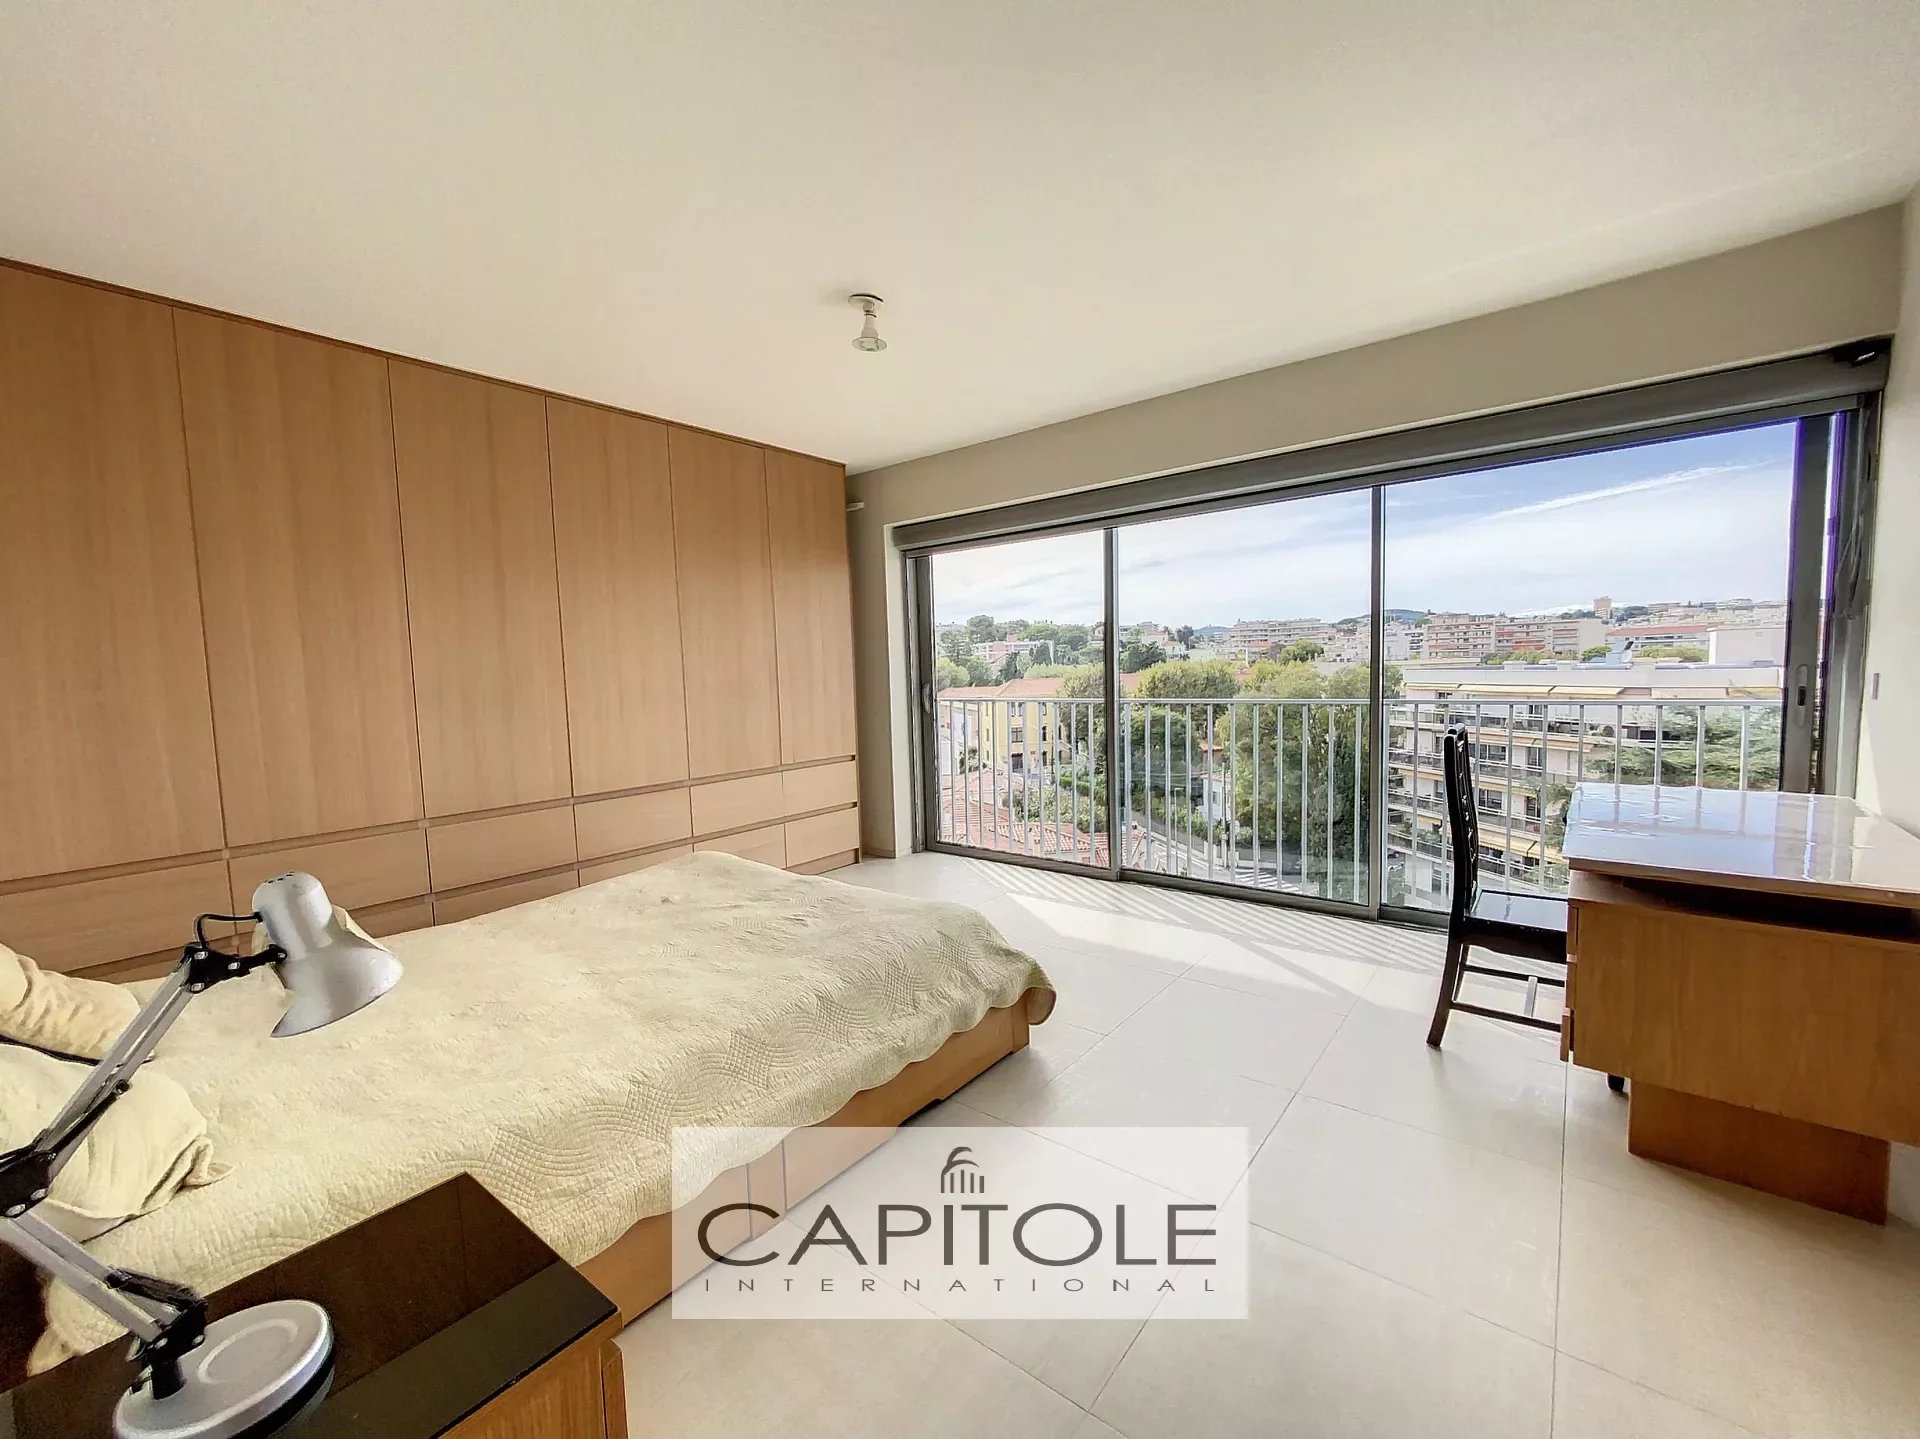 For sale, ANTIBES near PONTEIL beach, 92 m² 3 bedroom apartment, terrace, double garage